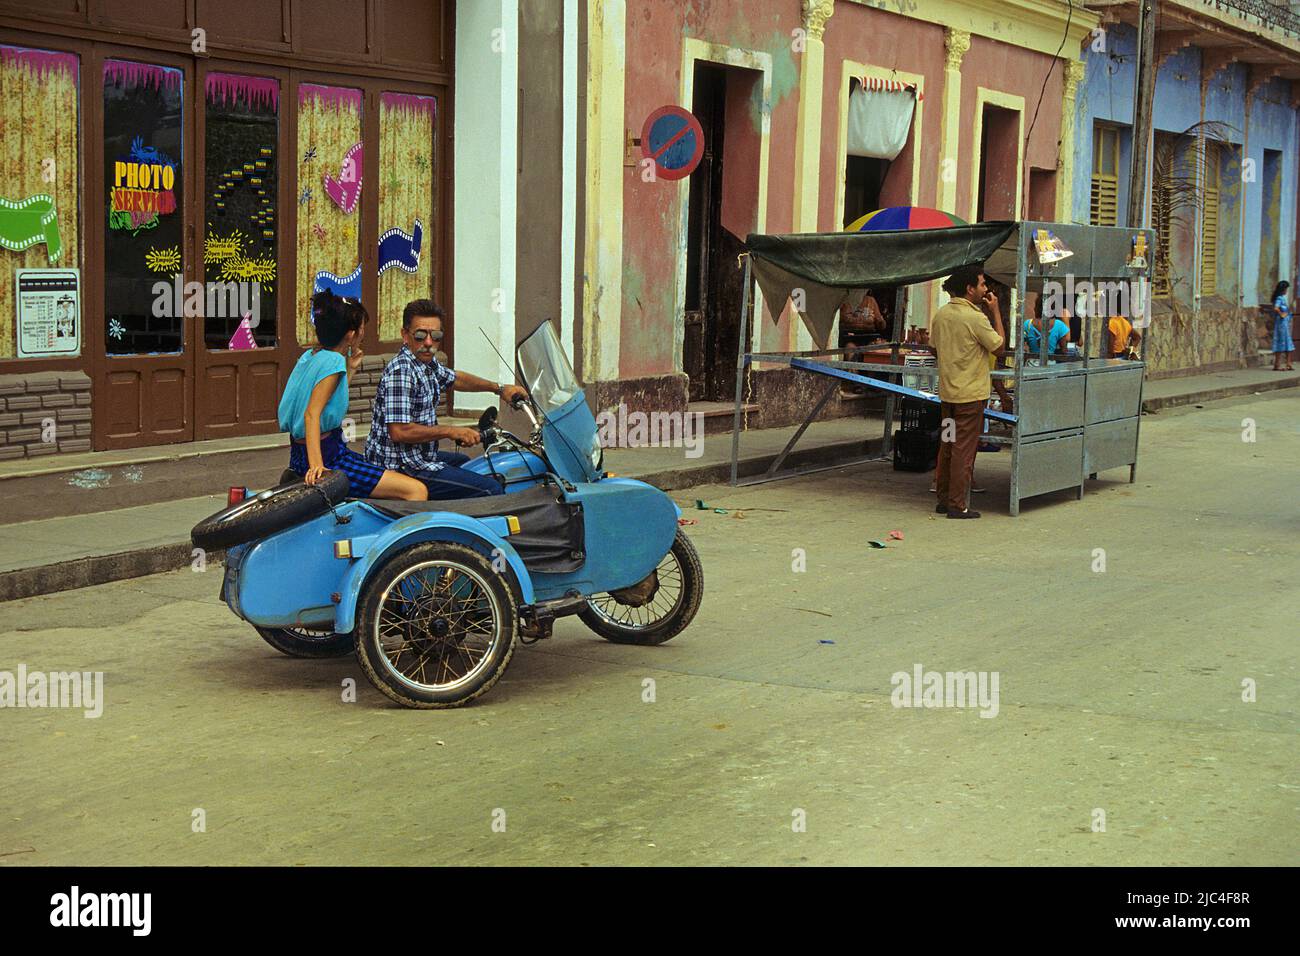 Street scene, motorbike with sidecar on a street in Trinidad, Unesco World Heritage Site, Cuba, Caribbean Stock Photo